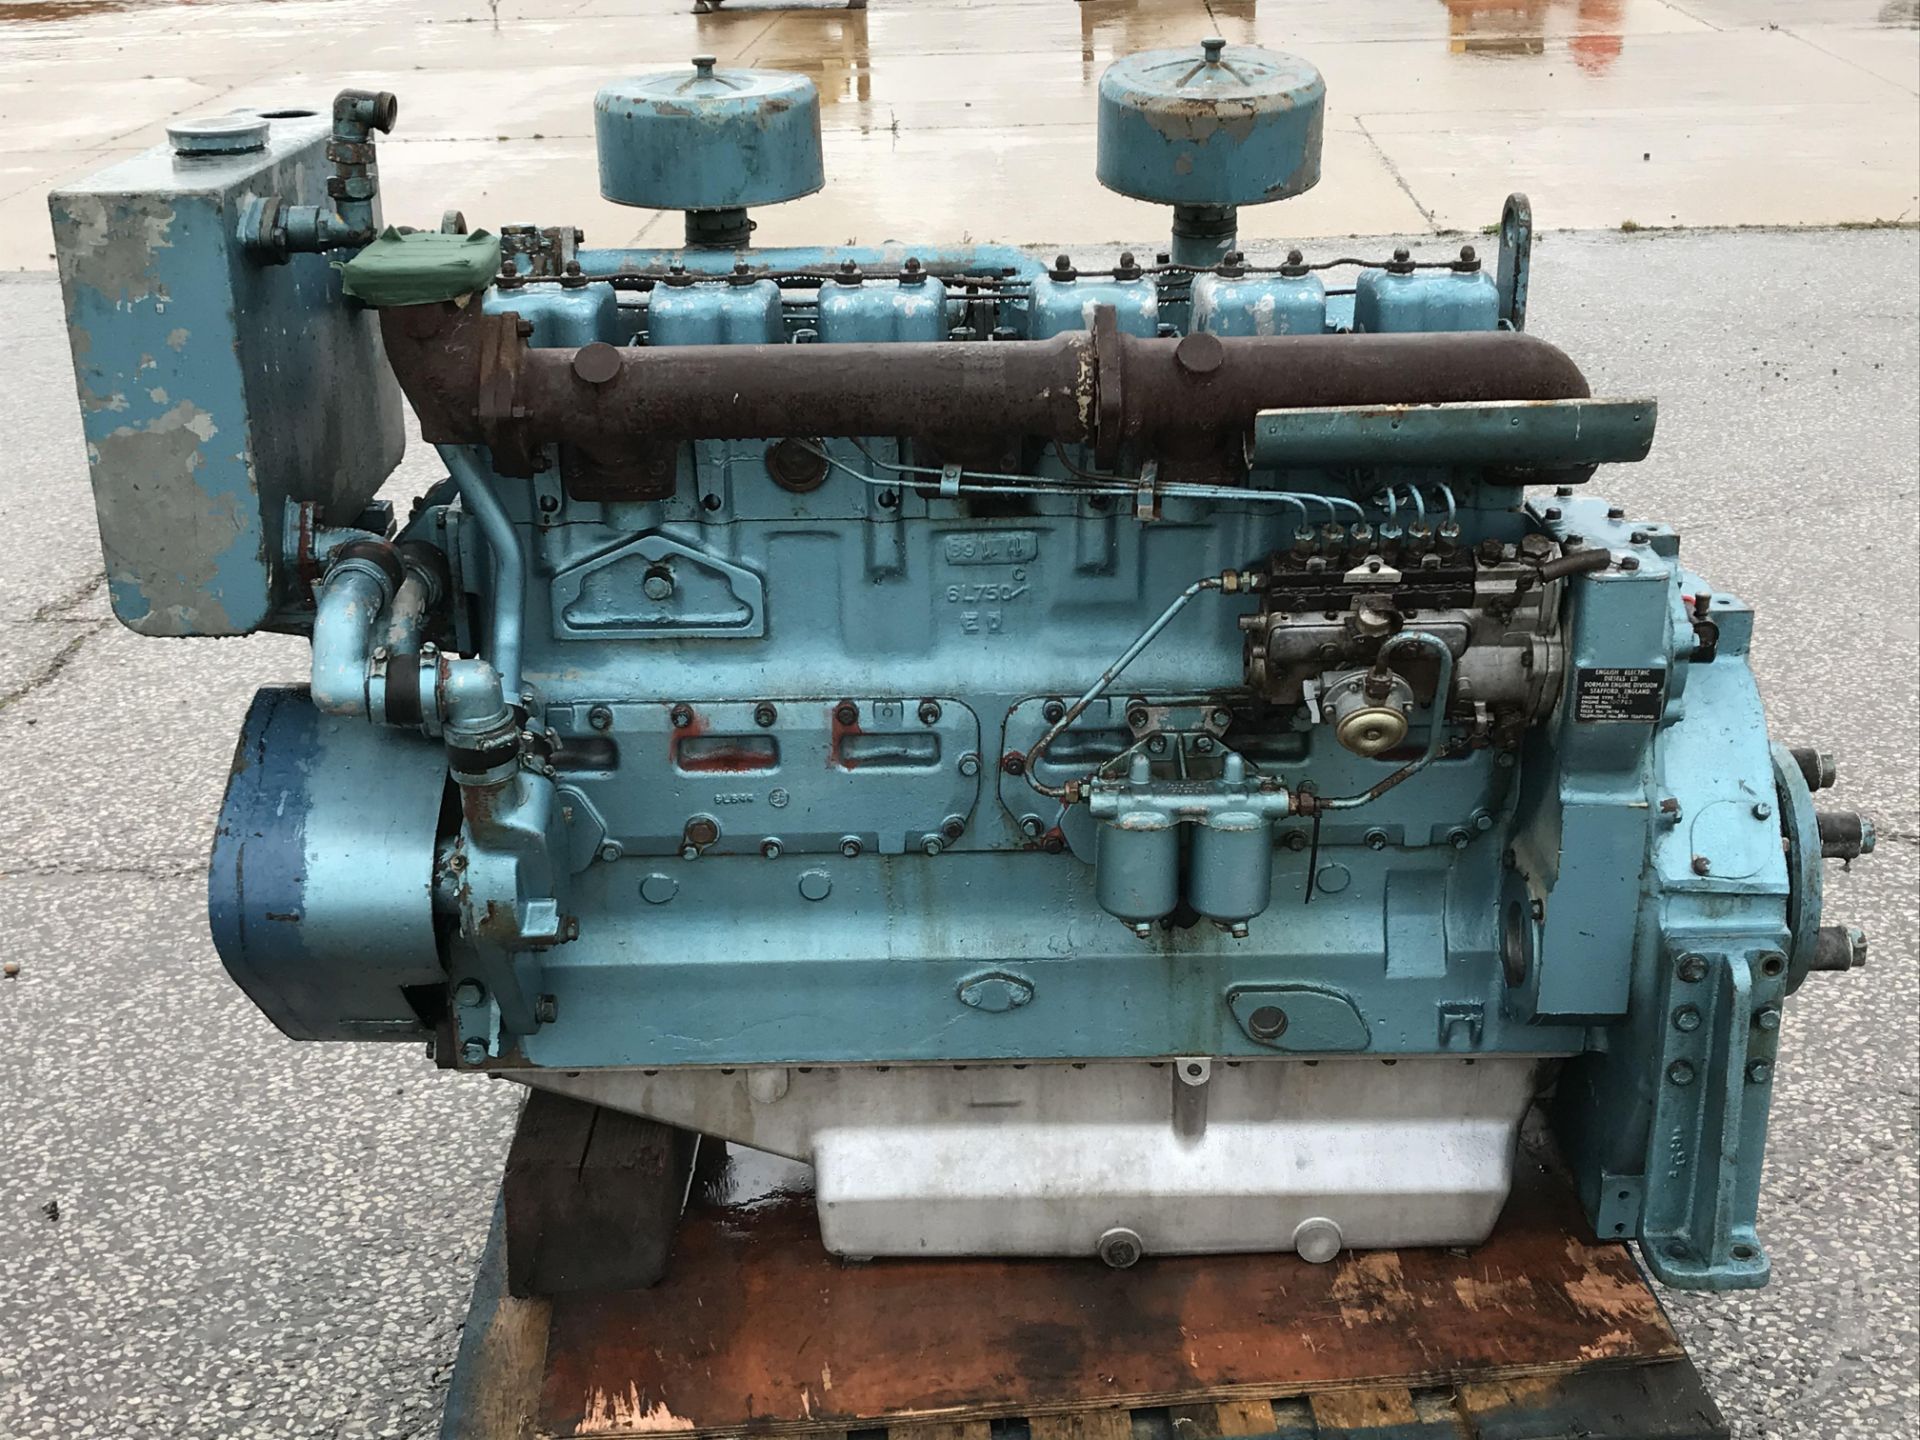 Dorman 6LE Diesel Engine Ex Standby - Image 2 of 6